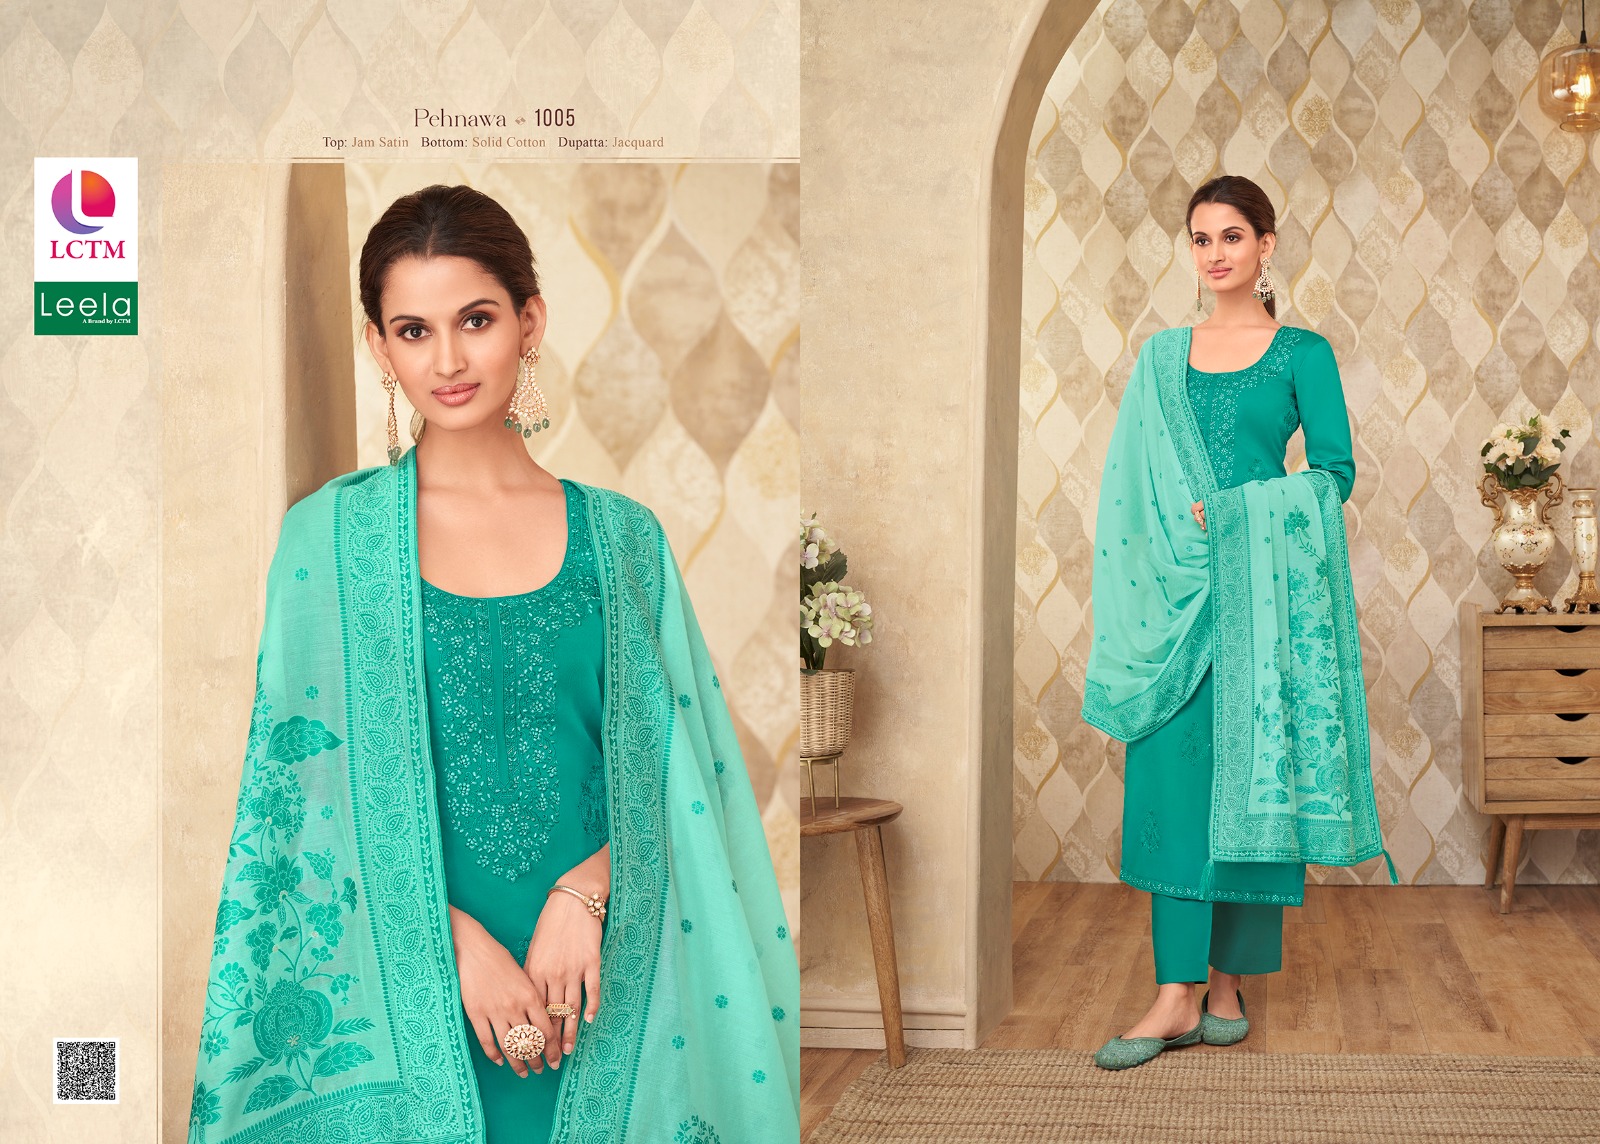 leela pehnawa jacquard festive look salwar suit catalog